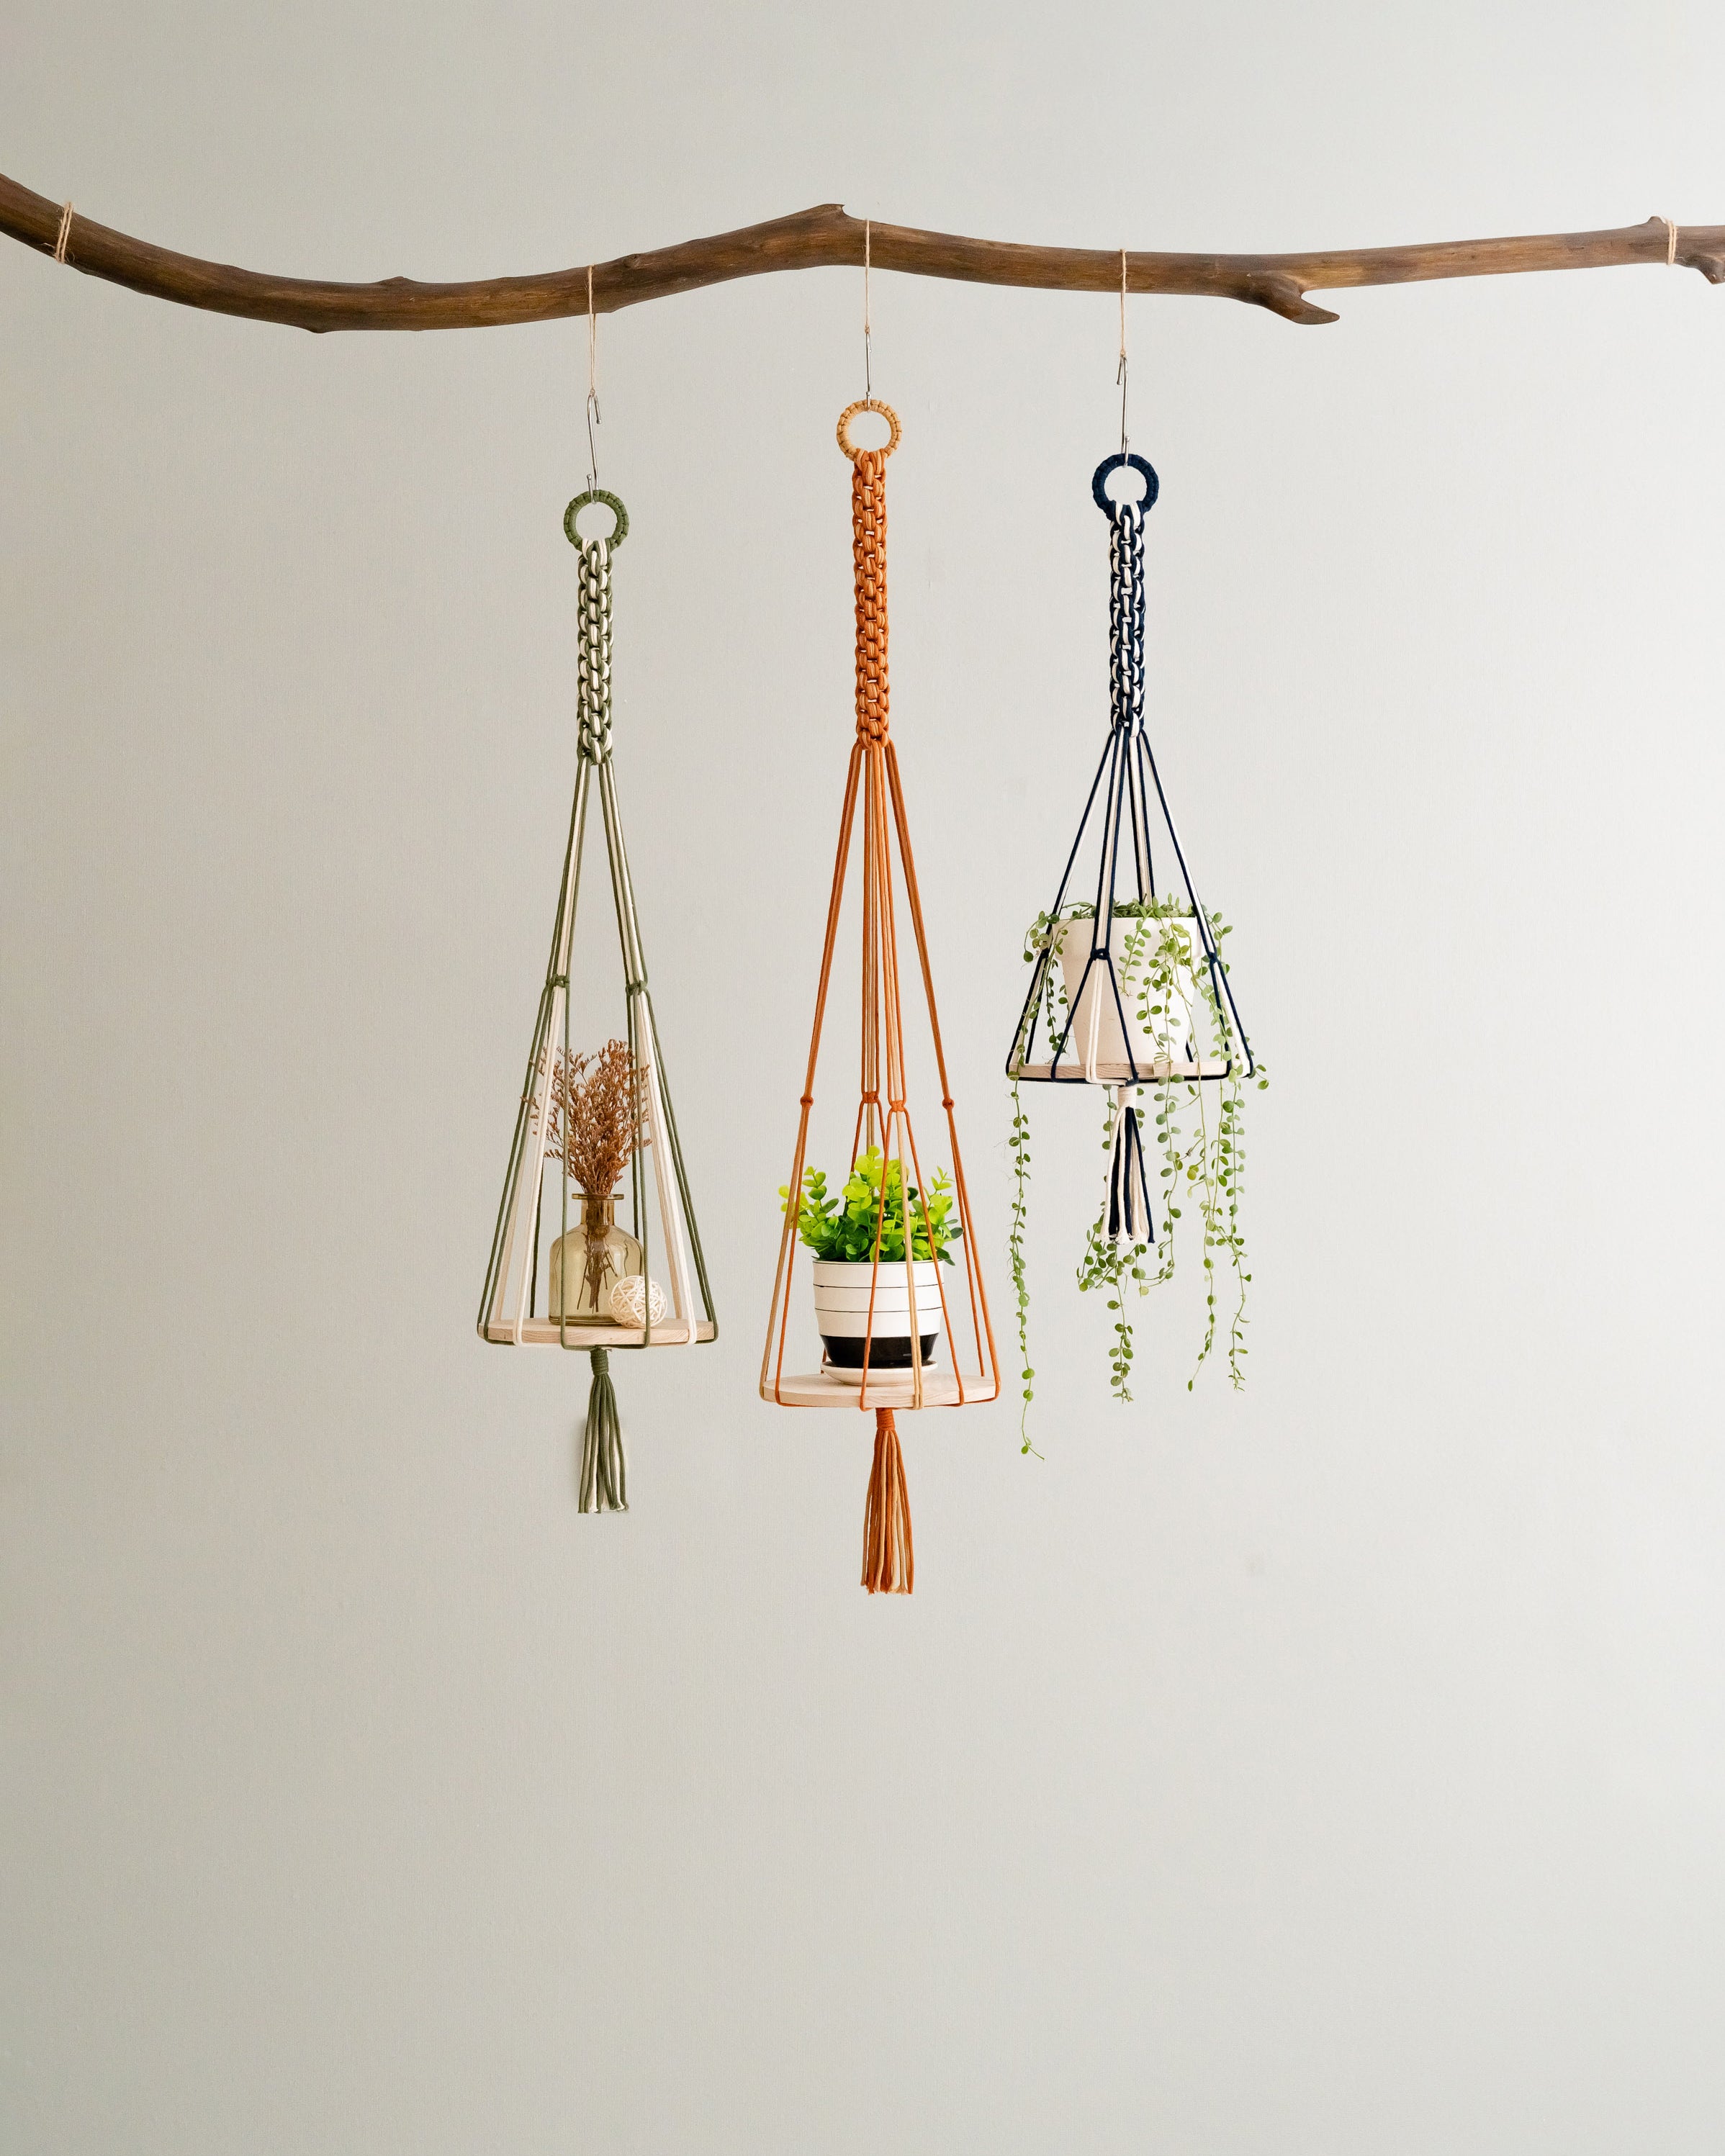 Macrame Plant Shelf for Stylish Indoor Hanging Planters